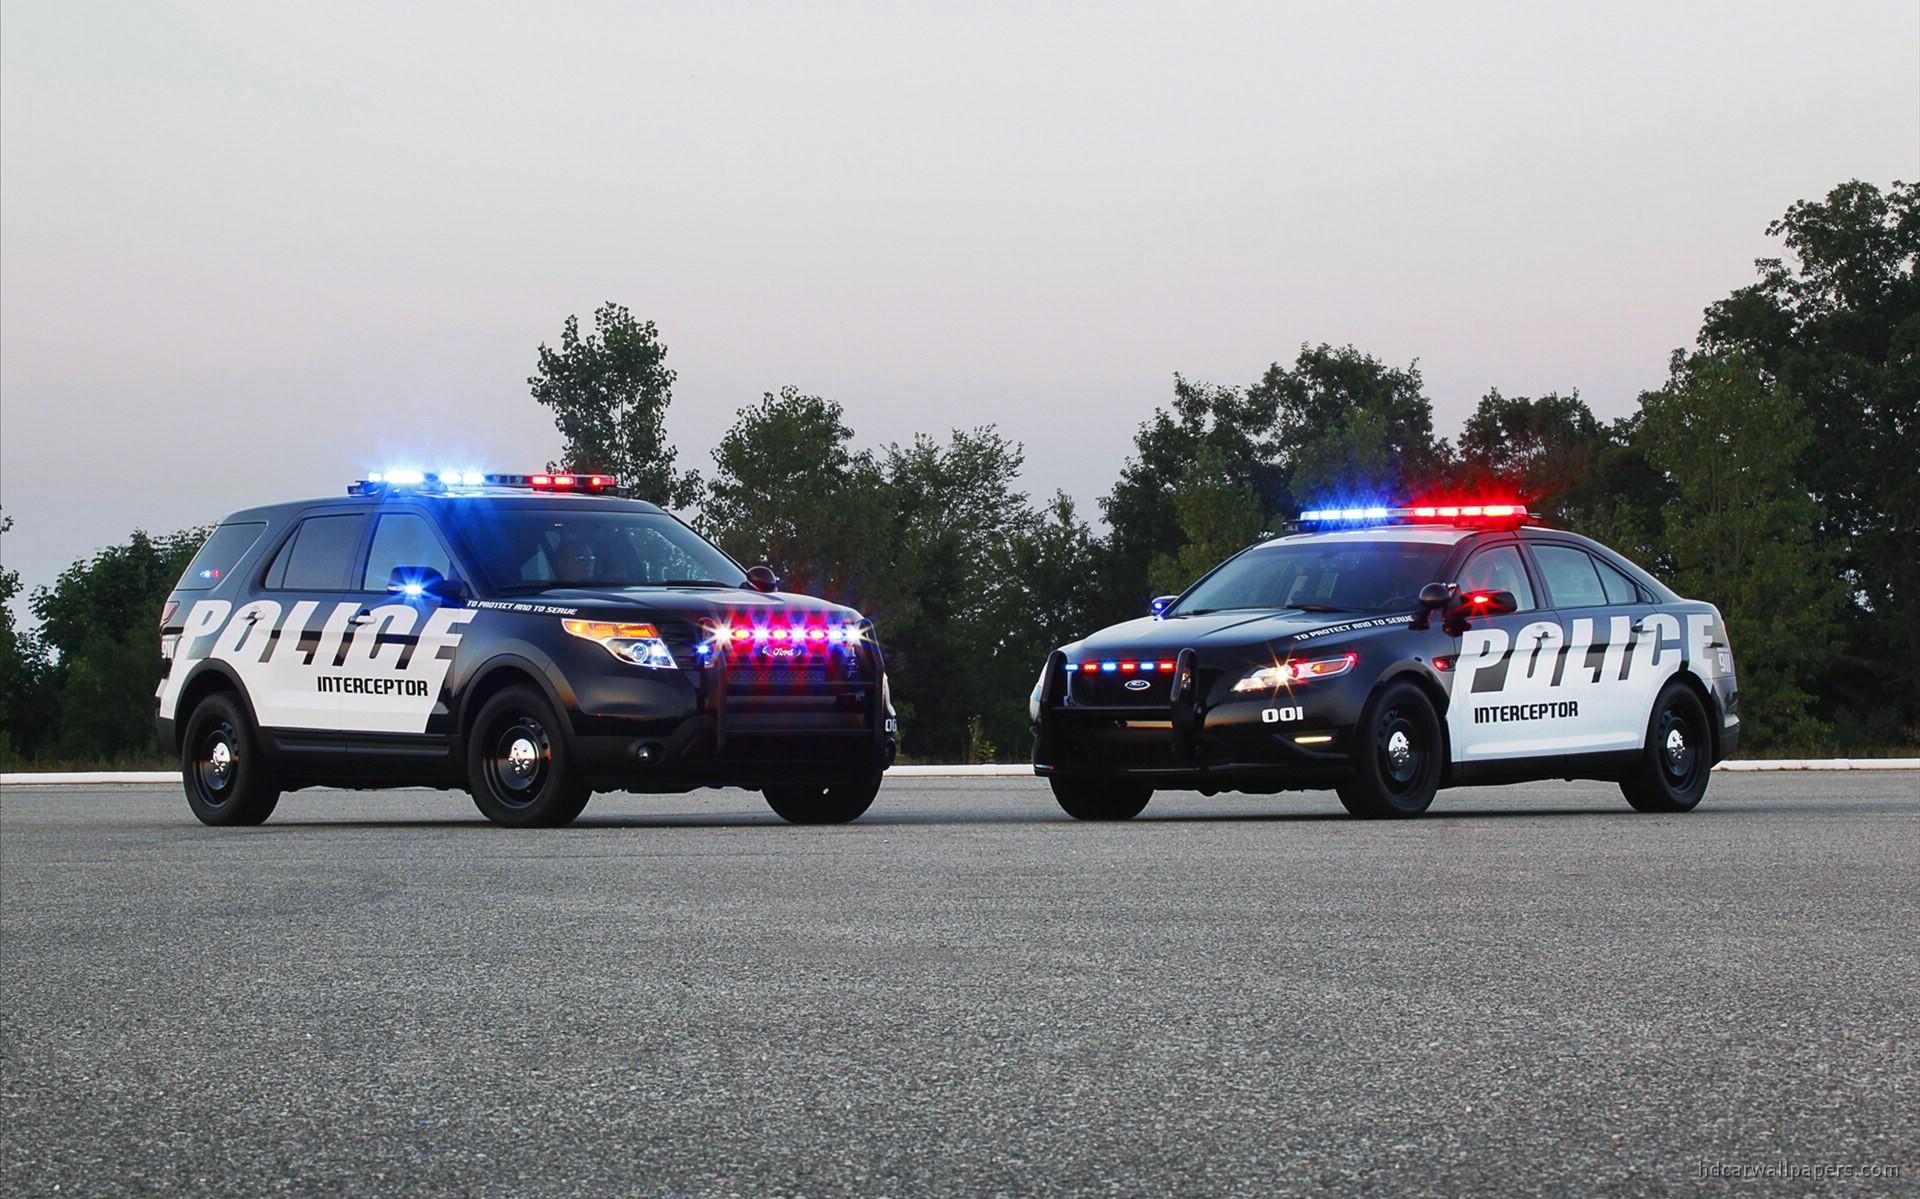 2011 Ford Police Interceptor SUV Wallpaper   HD Car Wallpapers 1637